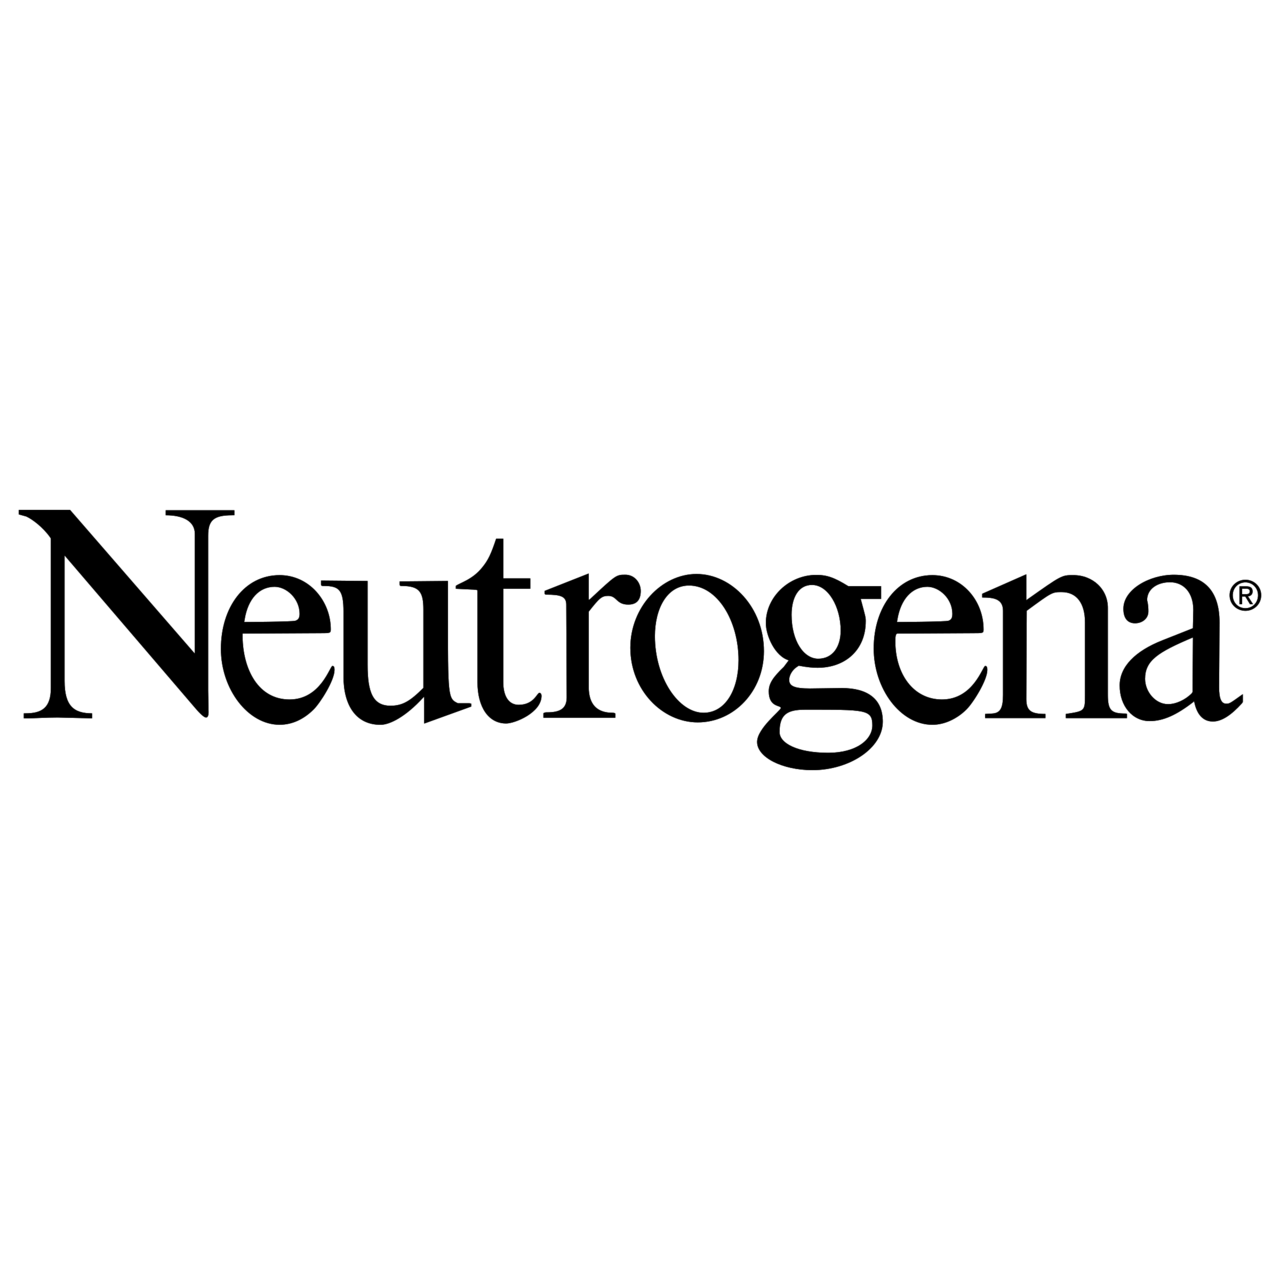 neutrogena logo black and white